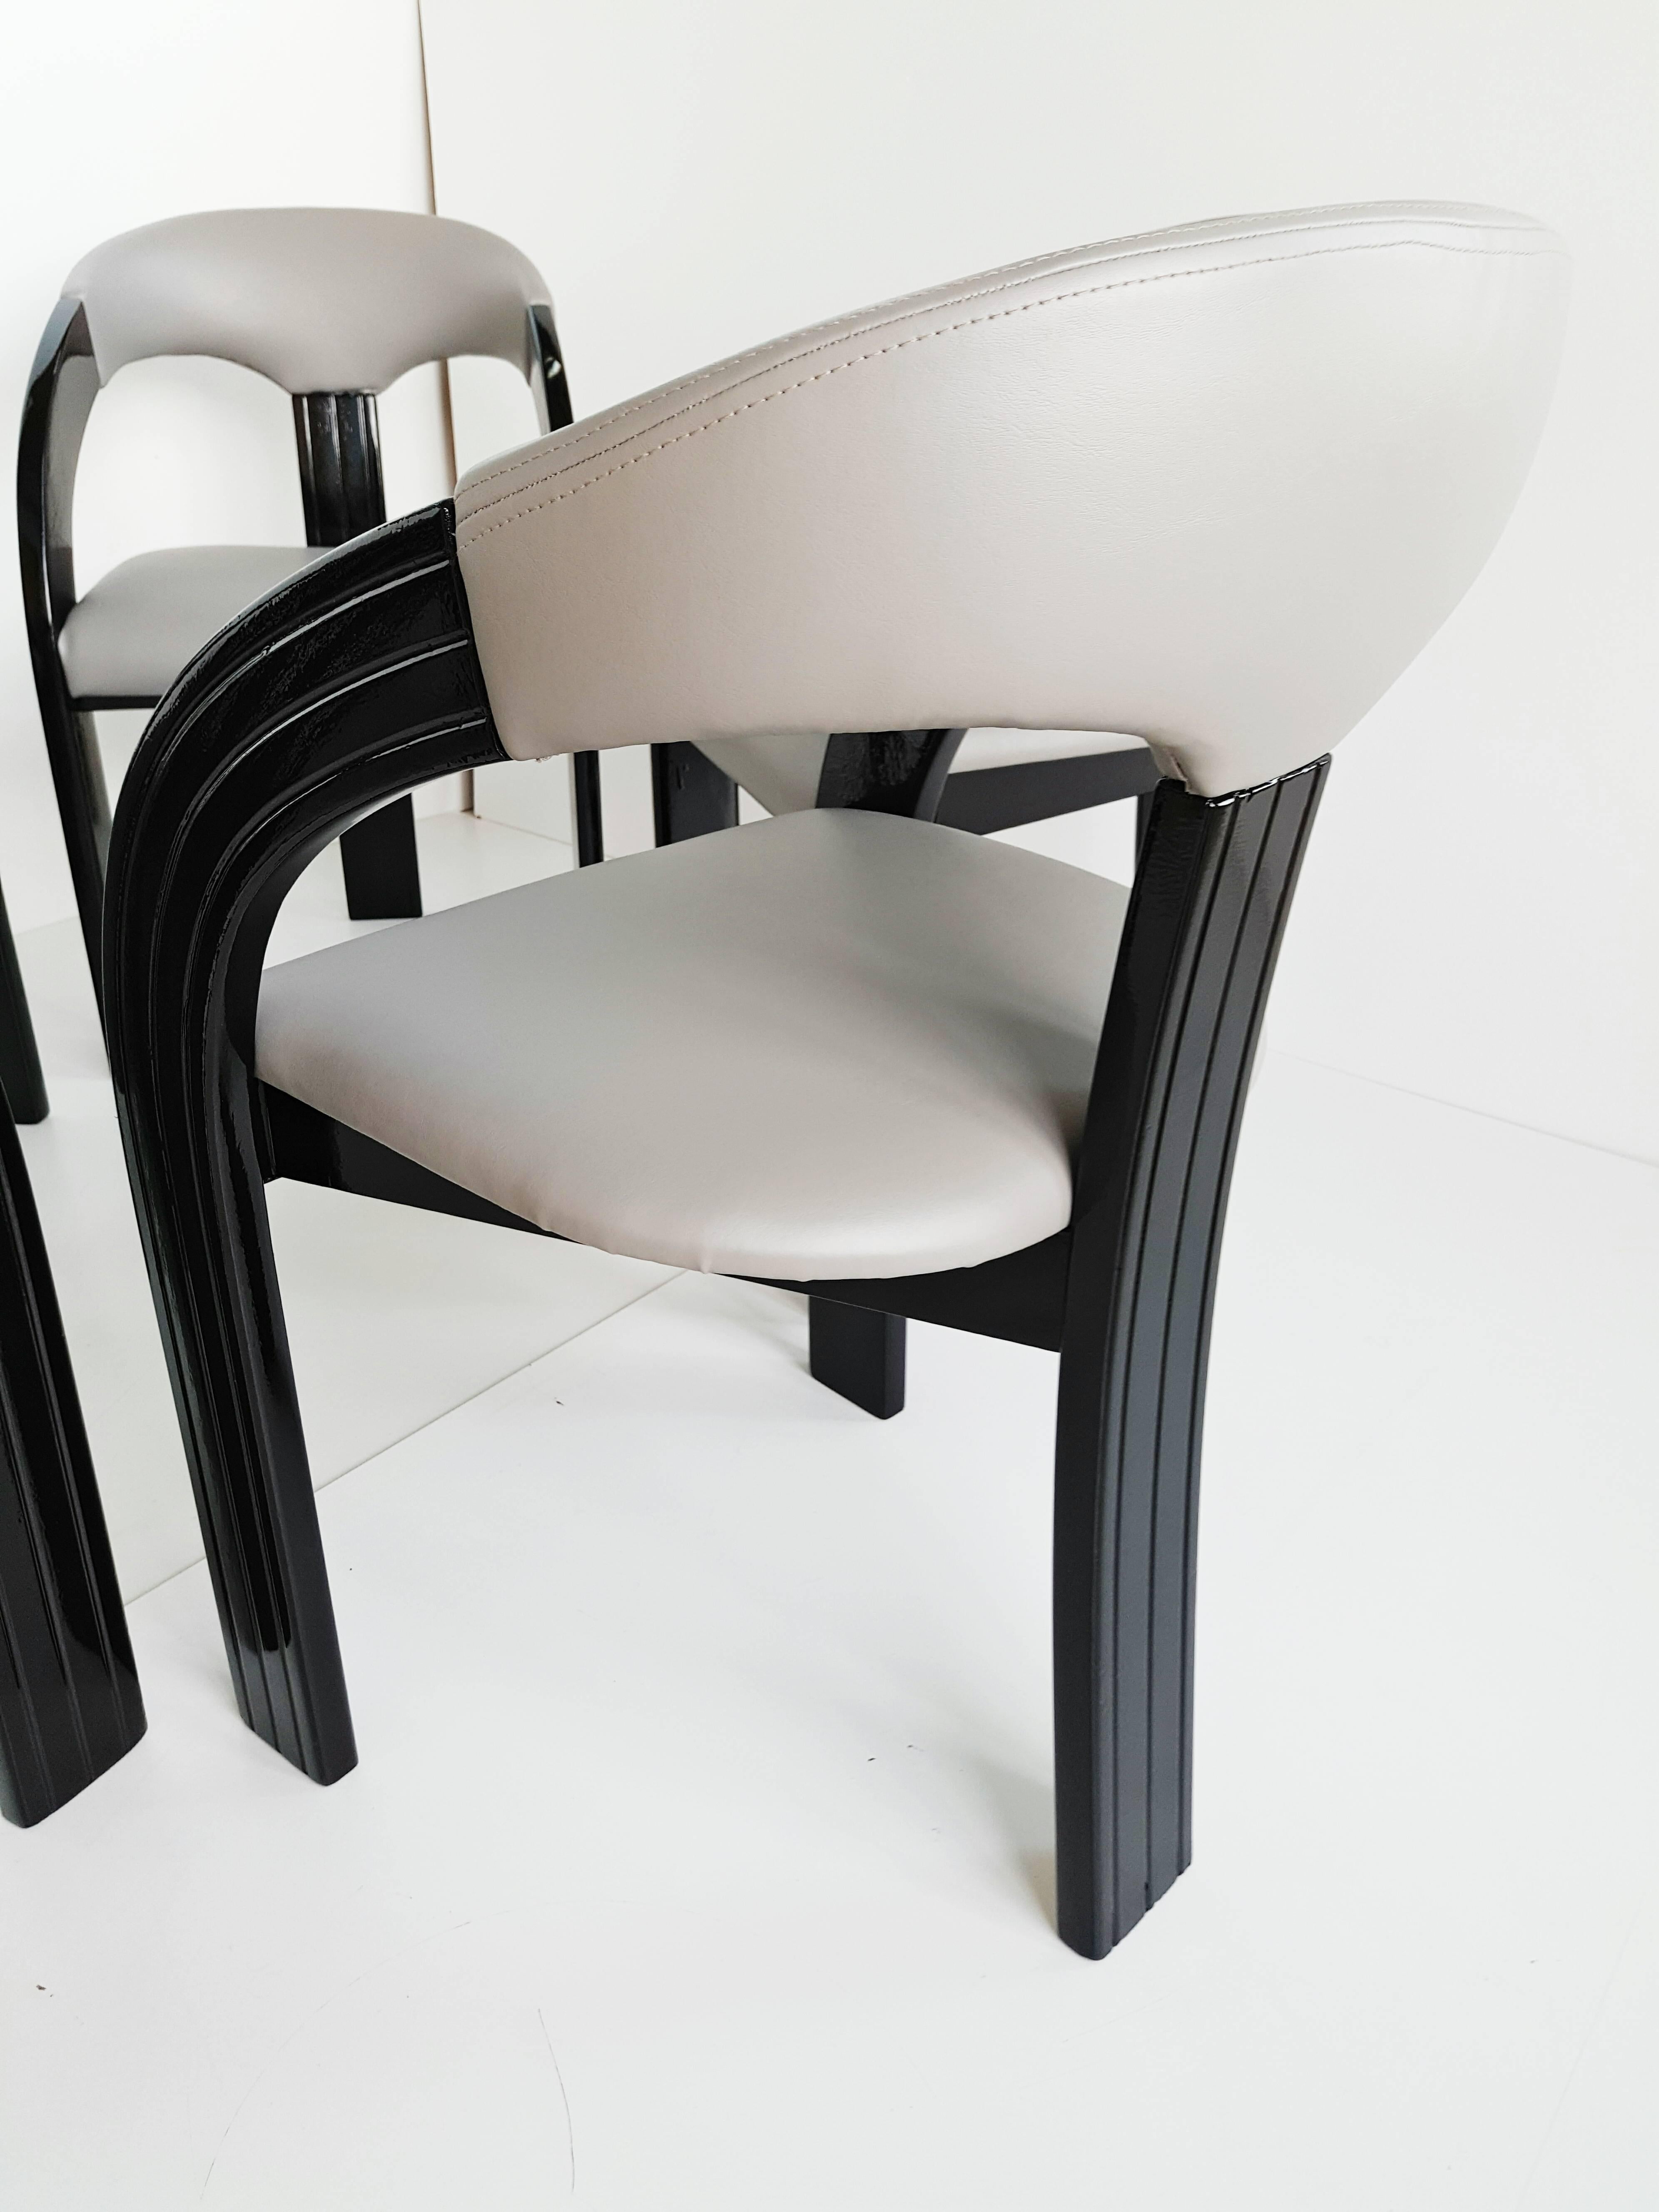 Set schwarz lackierter Sessel, 1960er Jahre (20. Jahrhundert) im Angebot